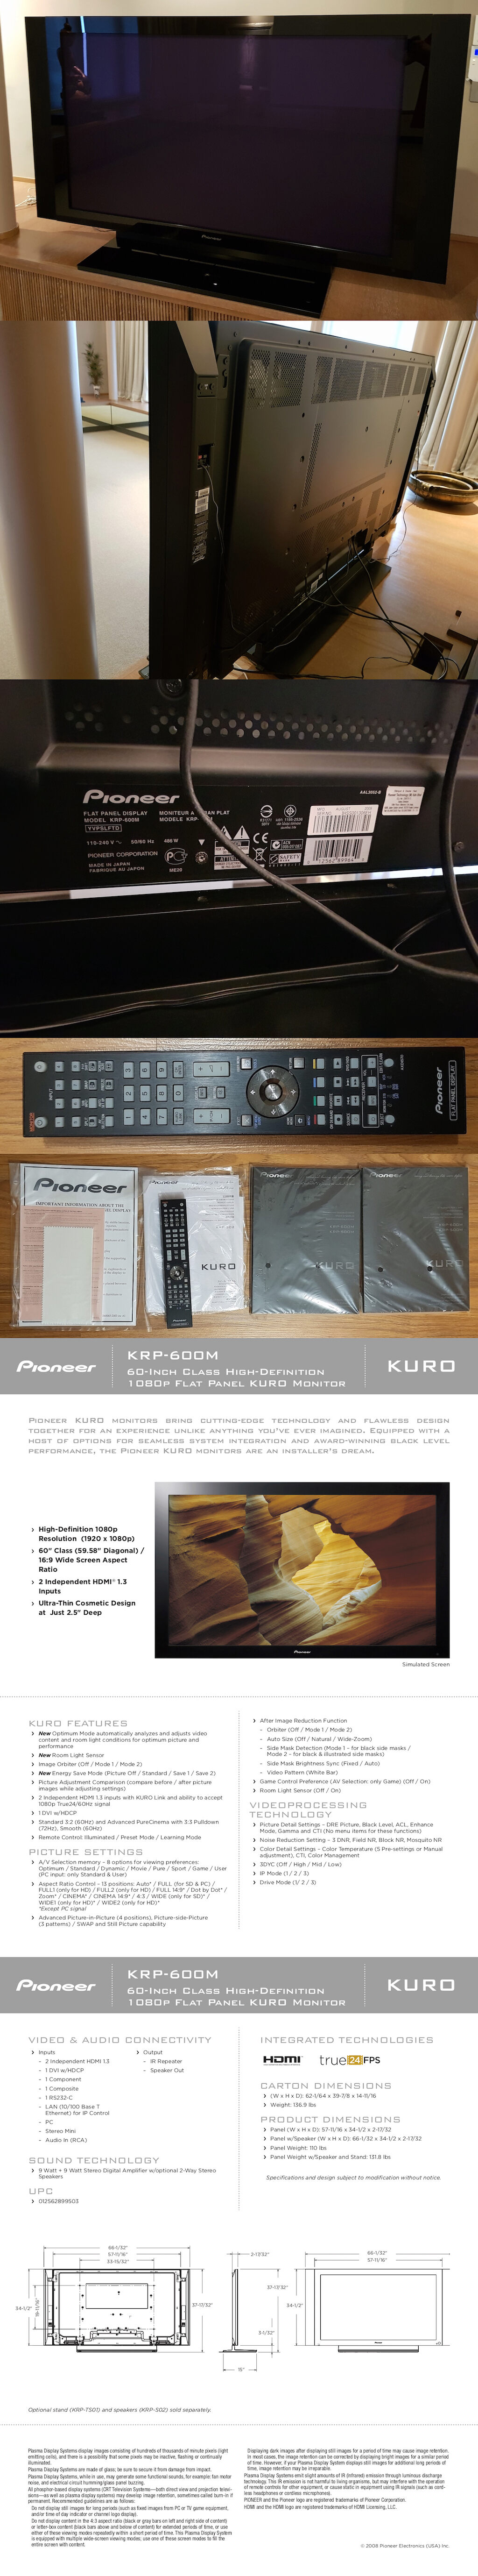 Pioneer KURO KRP-600M 60-Inch 1080p Plasma TV - SOLD Pionee12